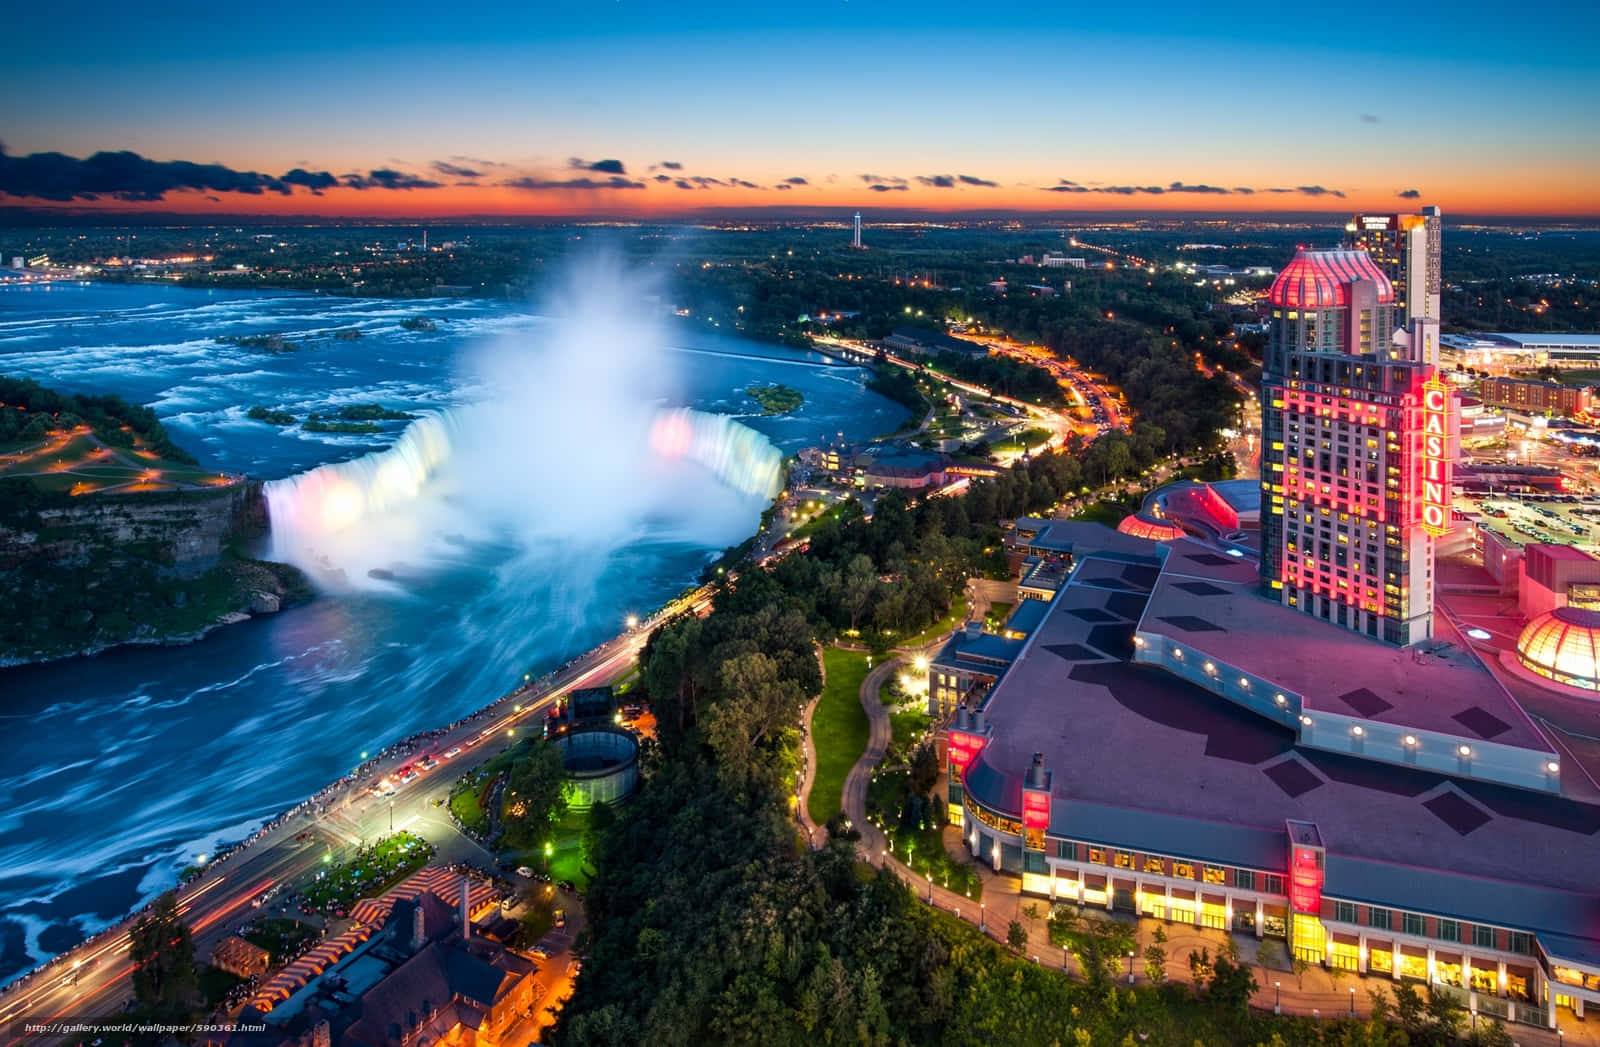 Vistaaérea Del Casino Niagara Falls Canadá. Fondo de pantalla